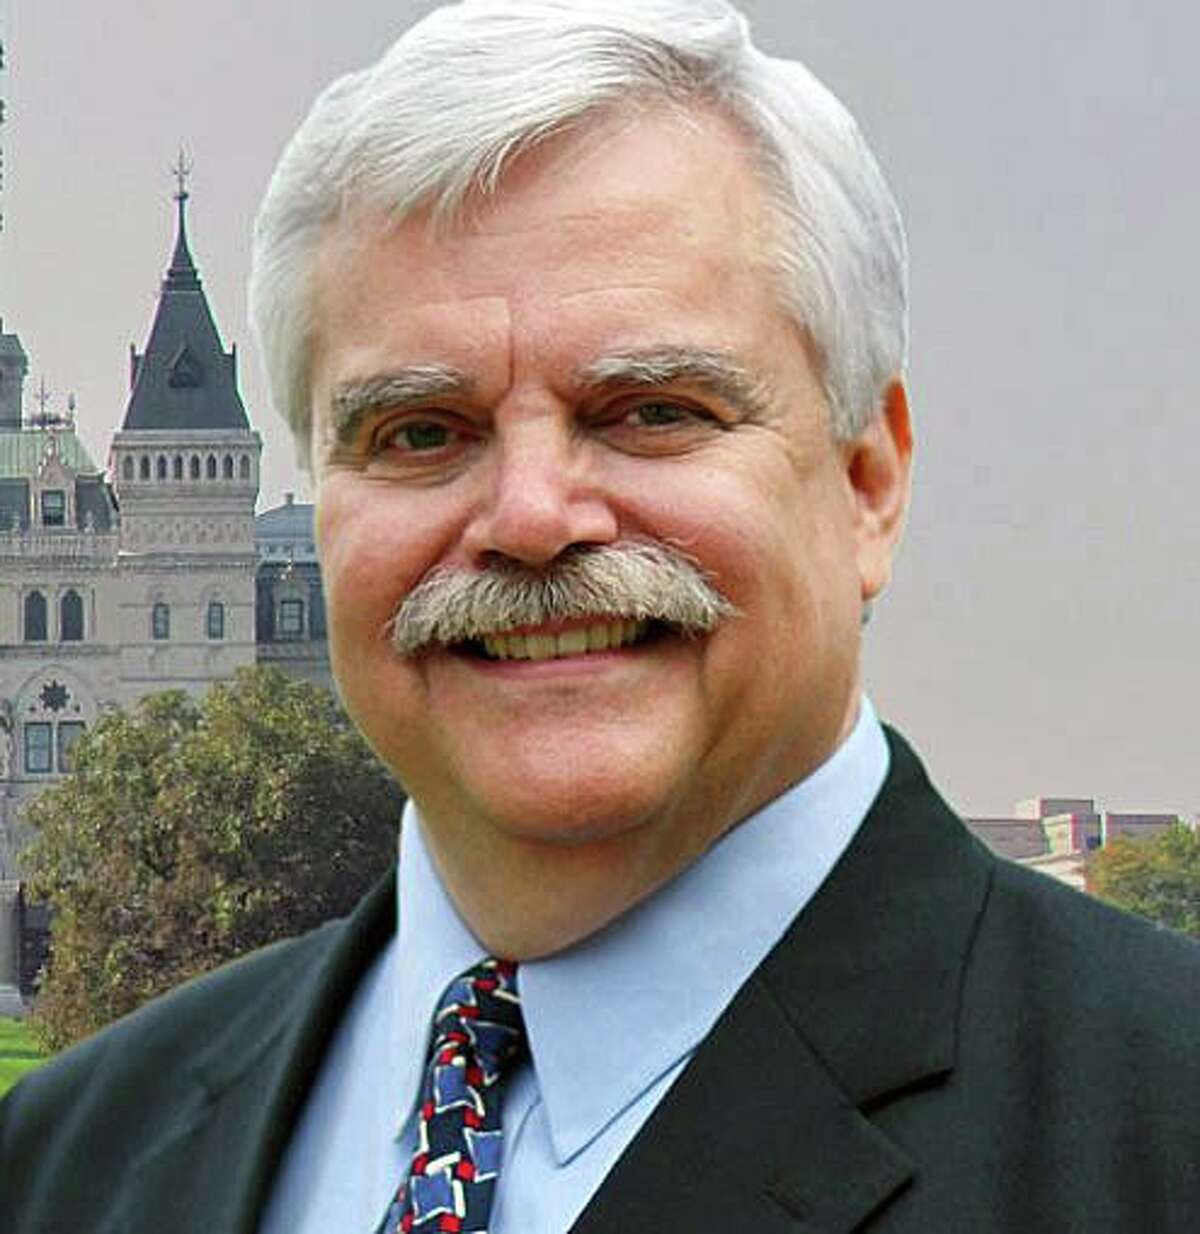 State Rep. Bob Godfrey